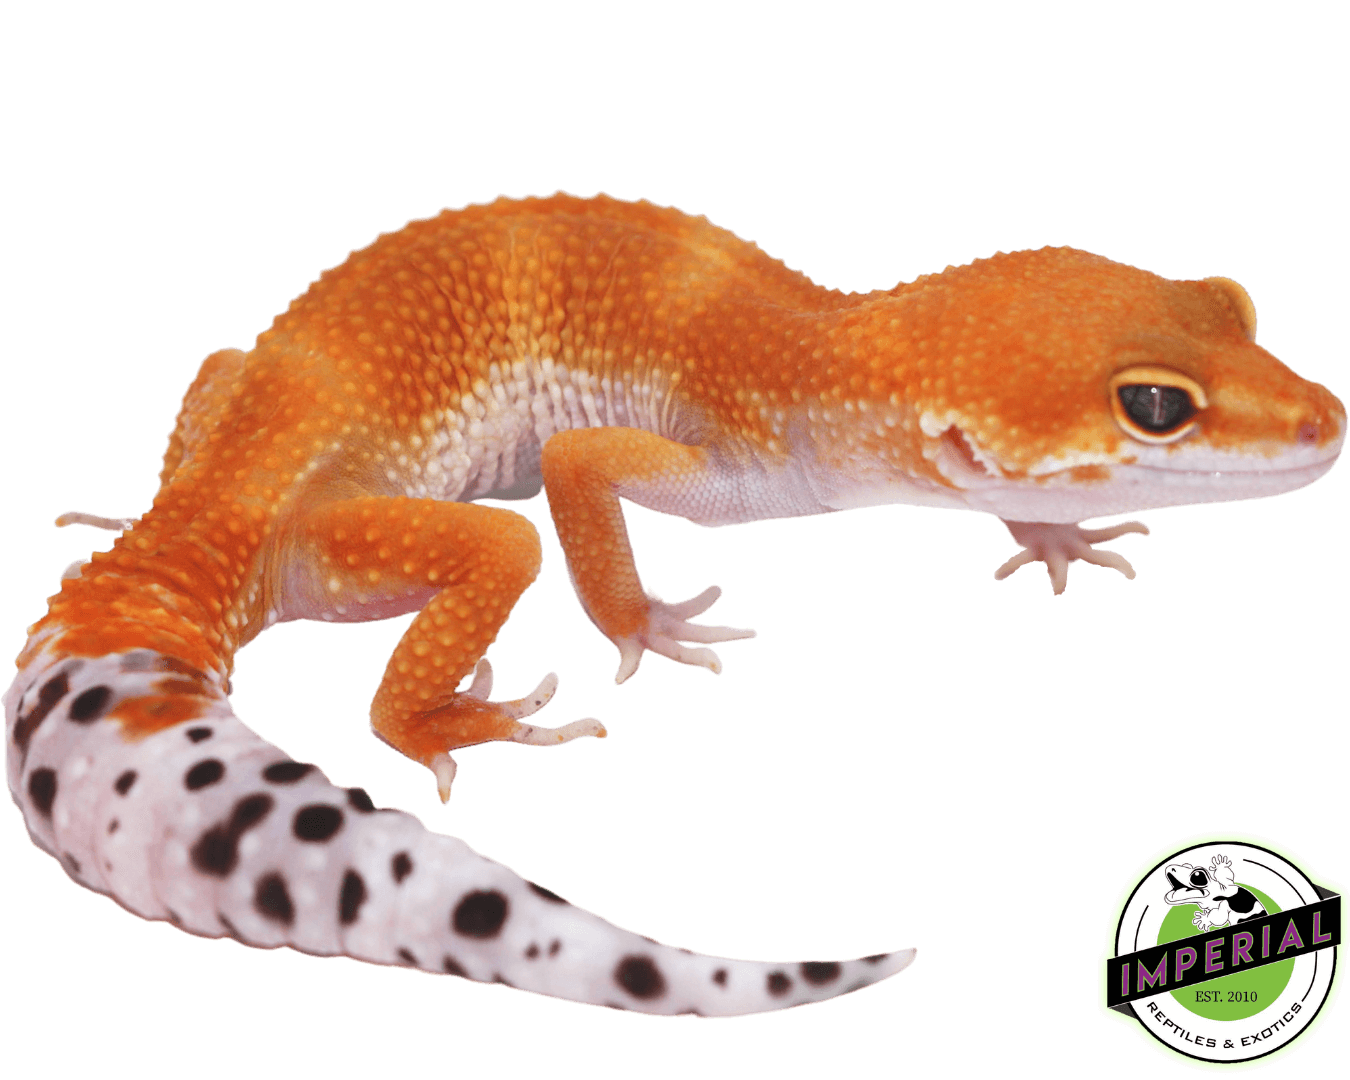 tangerine leopard gecko for sale, buy reptiles online